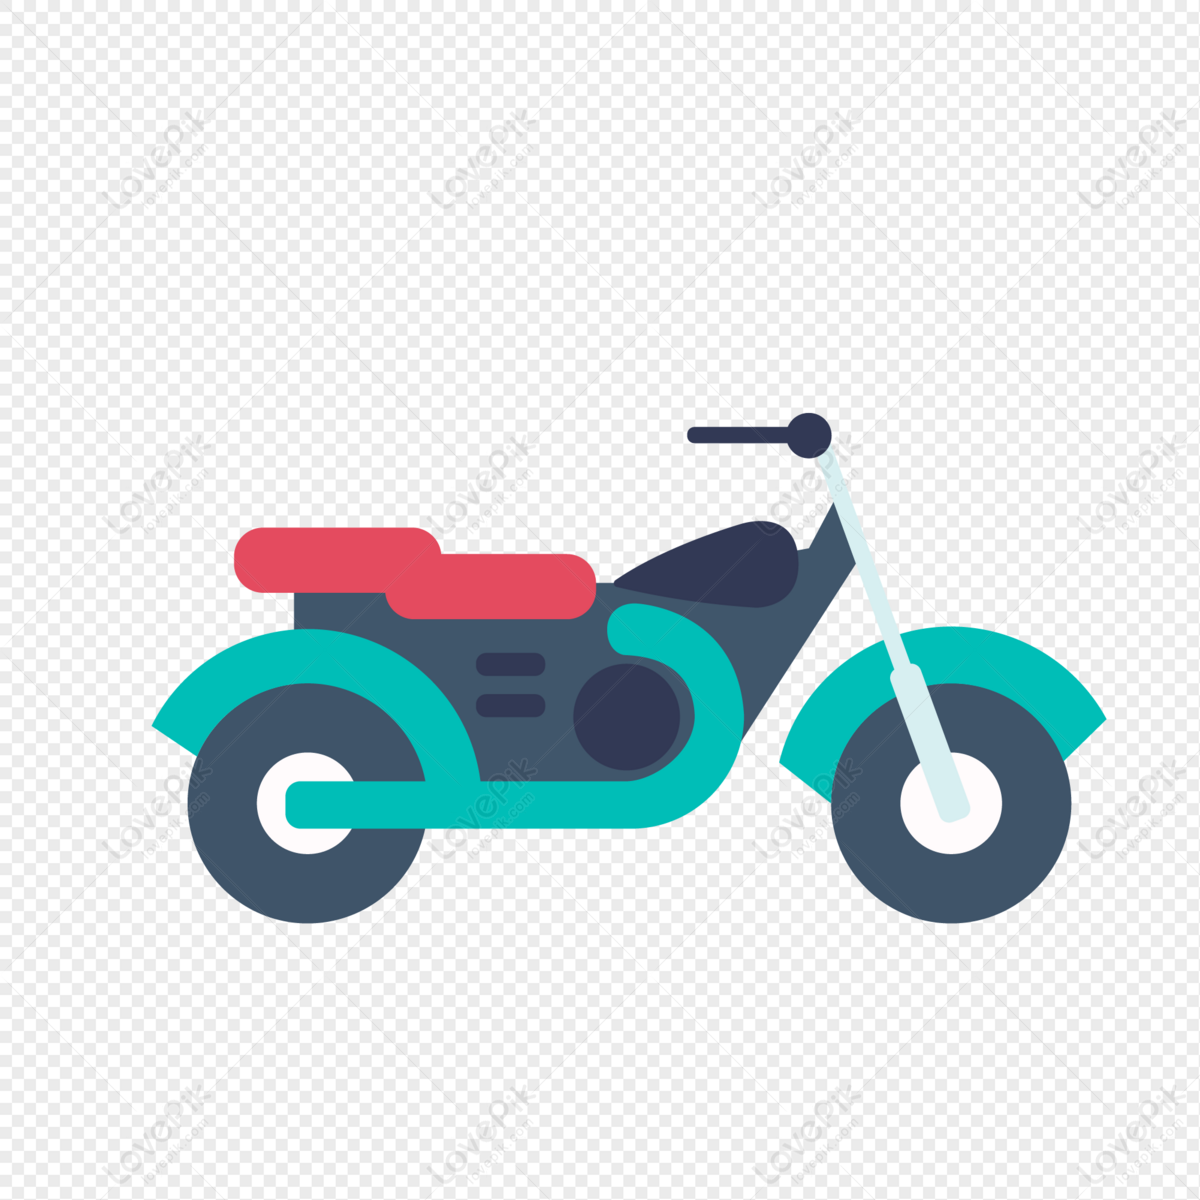 Free: Moto Moto Likes You Meme PNG Image  Transparent PNG Free Download   